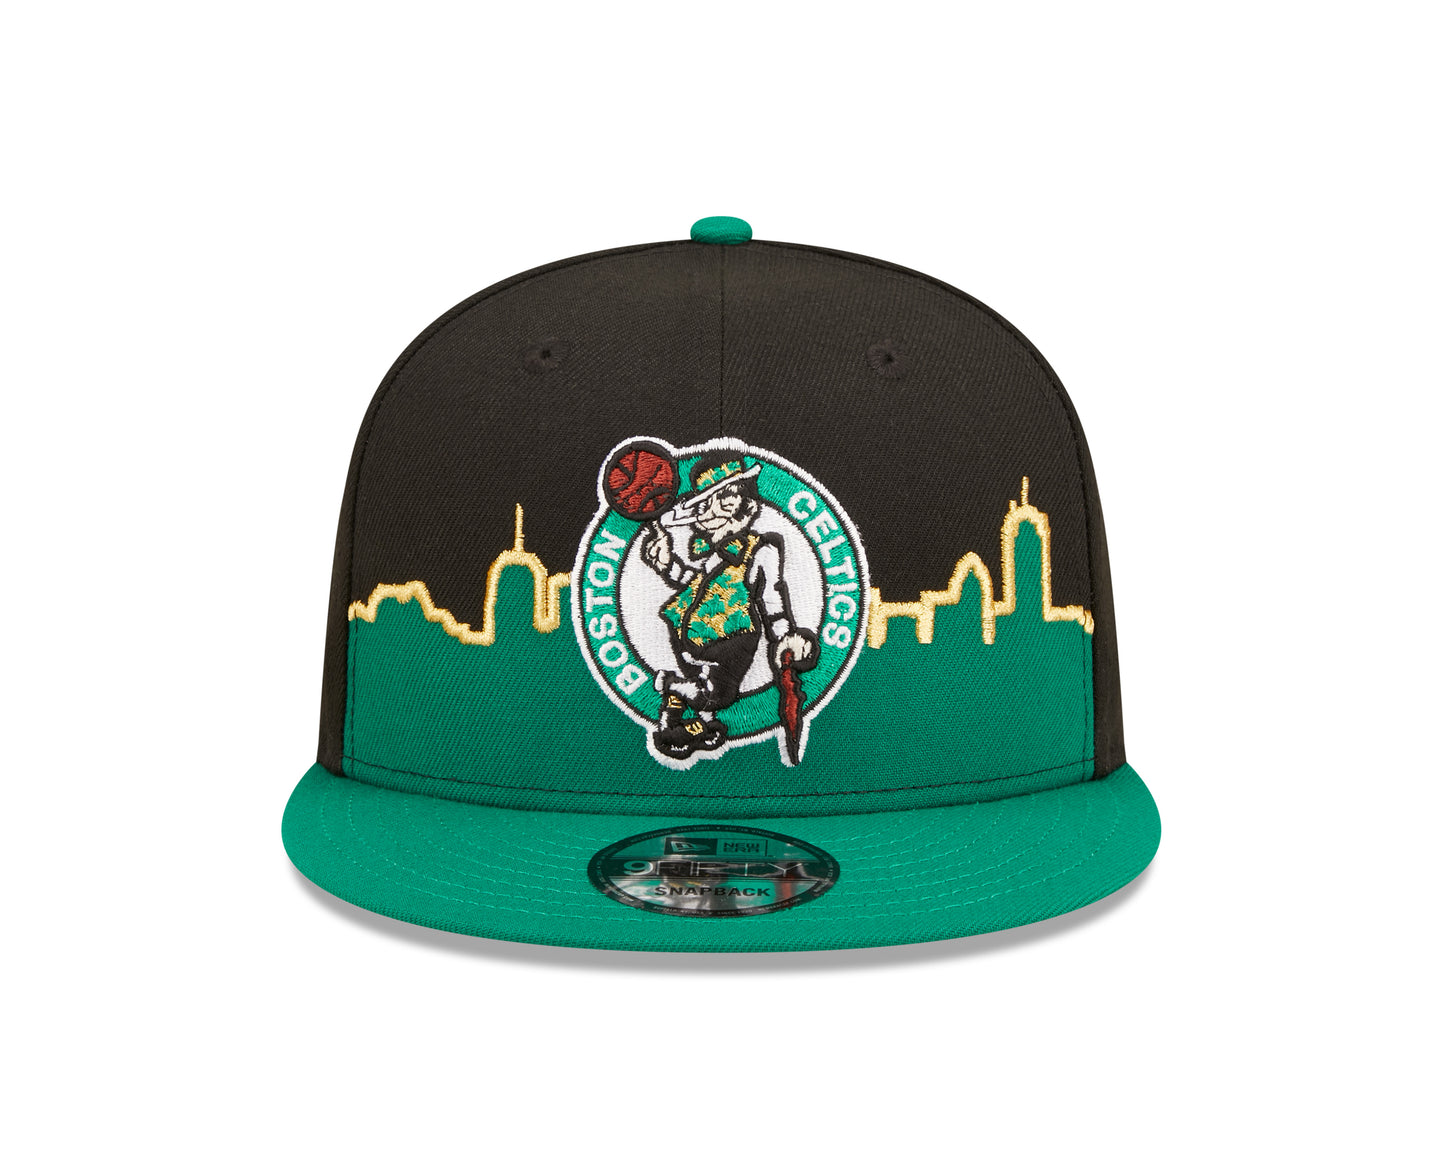 Boston Celtics New Era Tip-Off 9FIFTY Snap Back Hat - Green/Black